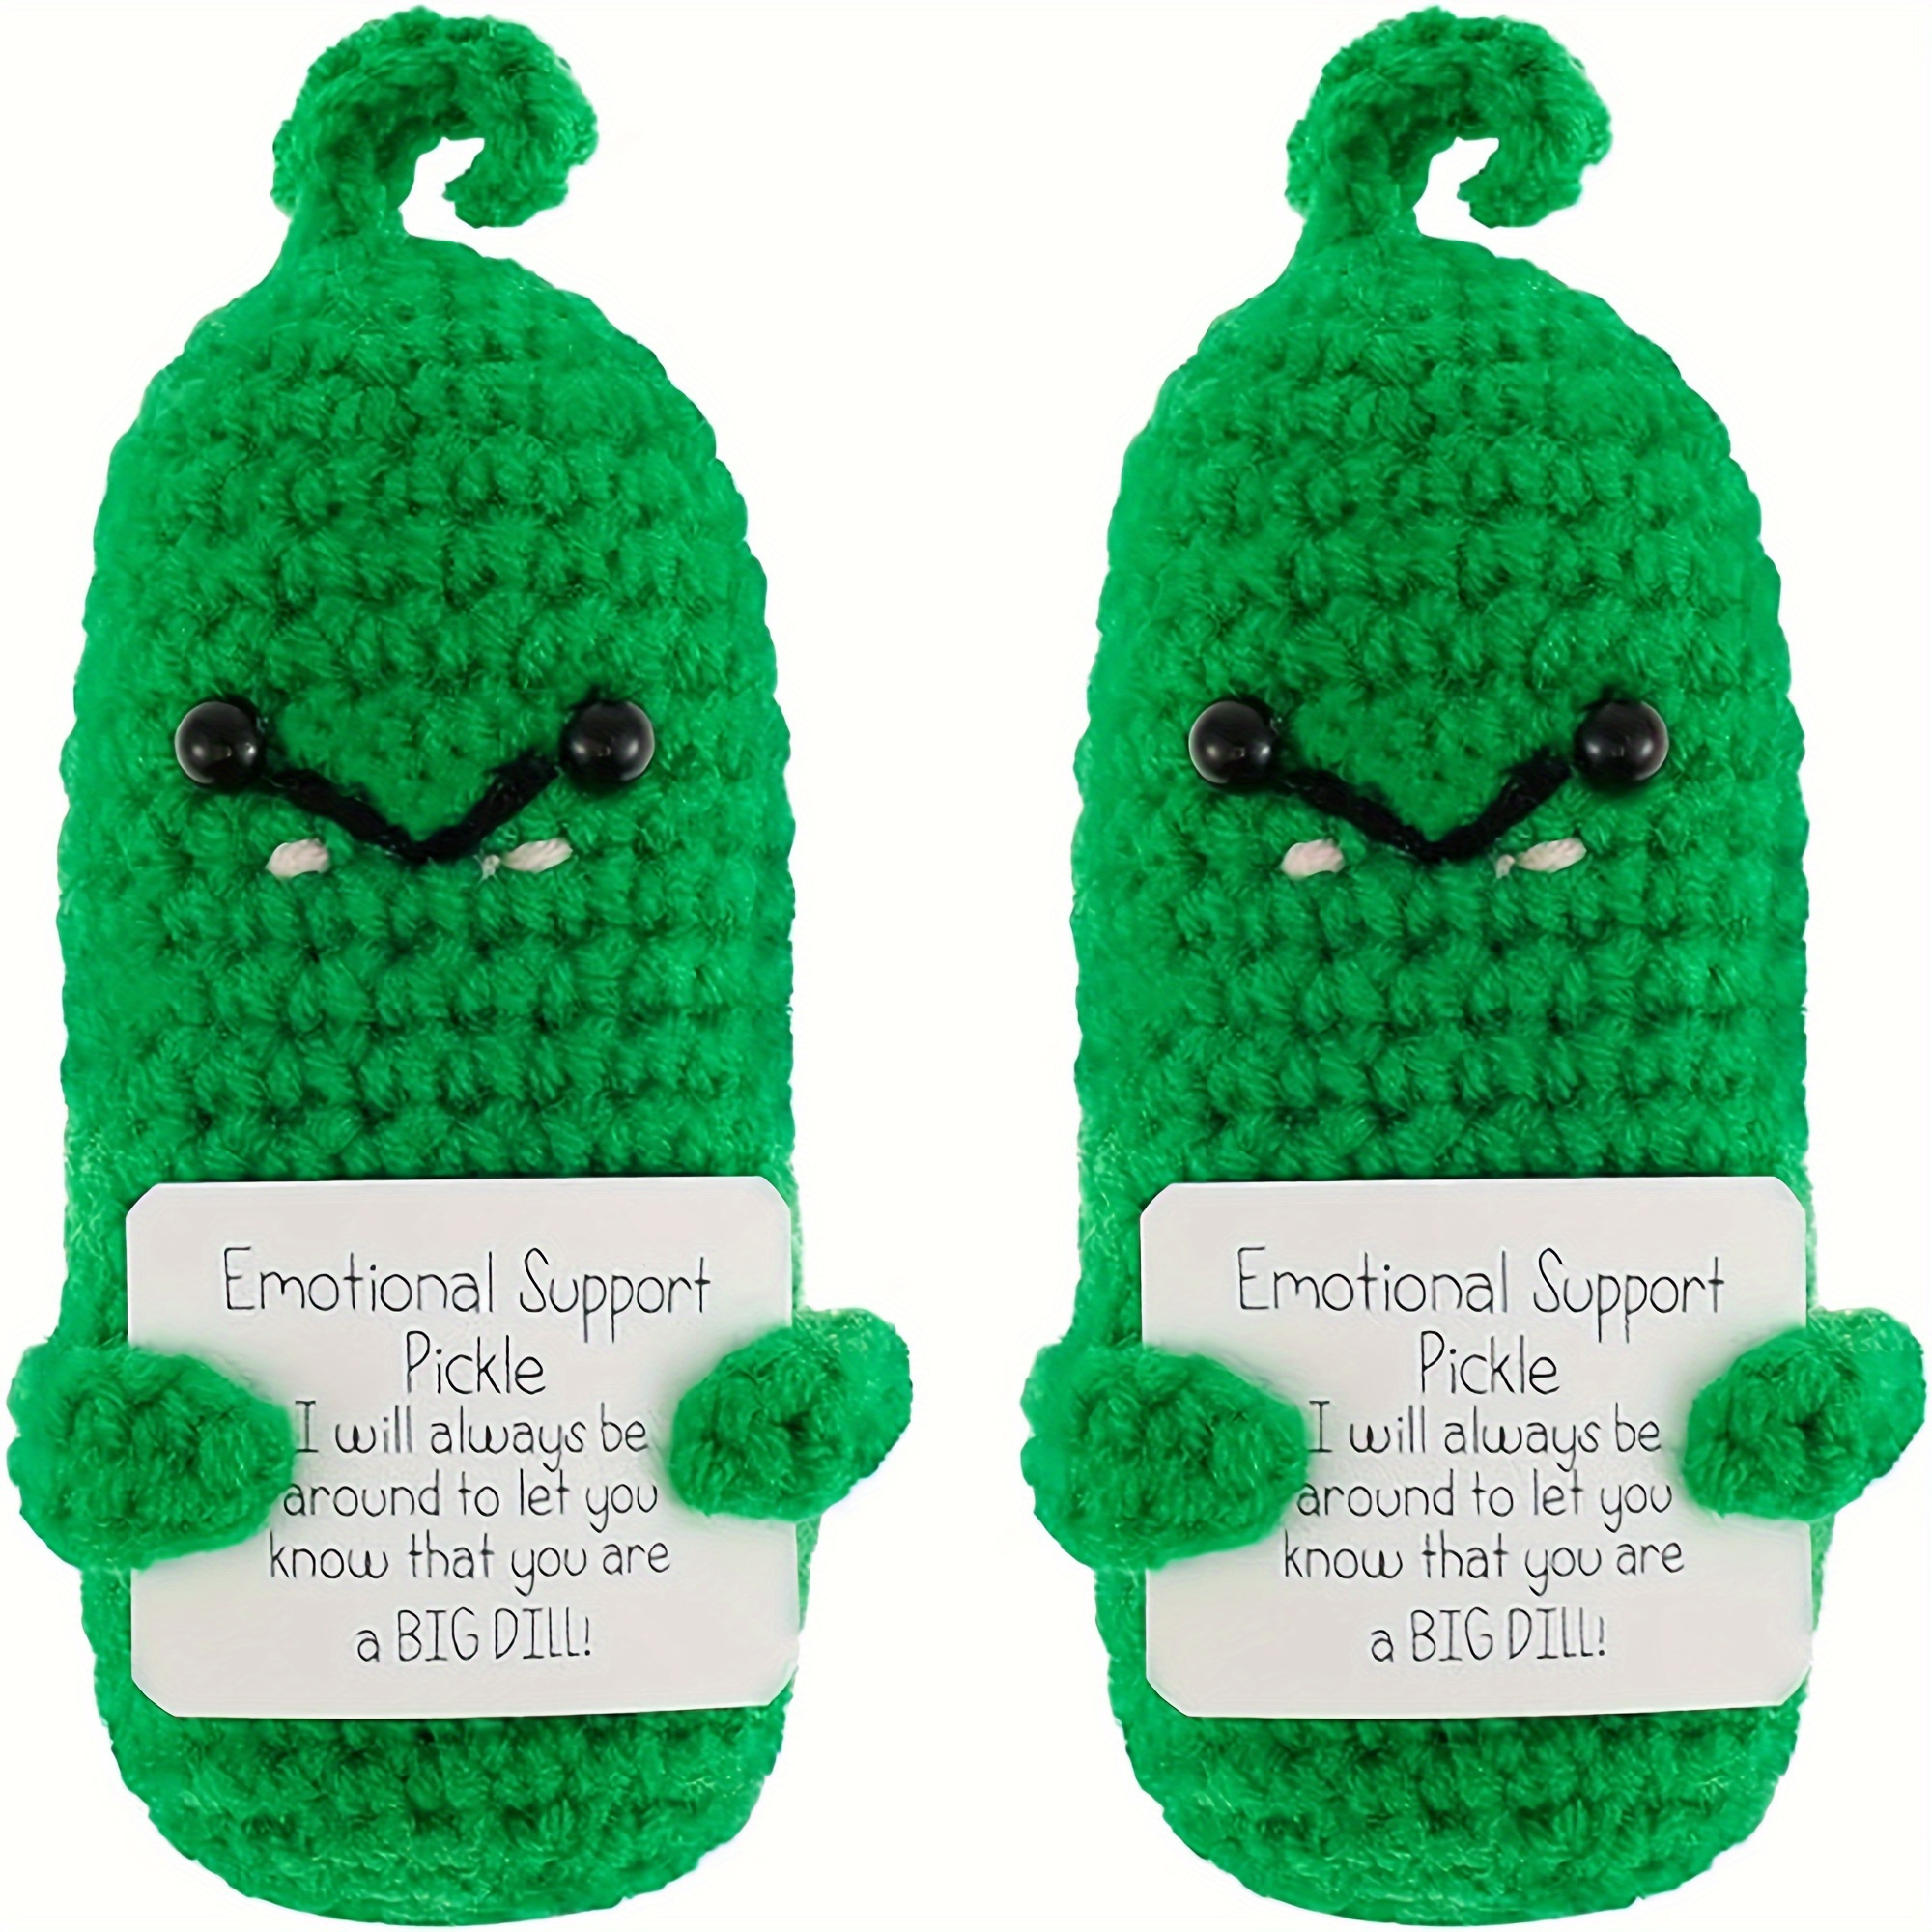 Handmade Emotional Support Pickled Cucumber Gift Handmade Crochetemotional Support  Pickles Crochet Pickled Cucumber Knitt Doll - AliExpress